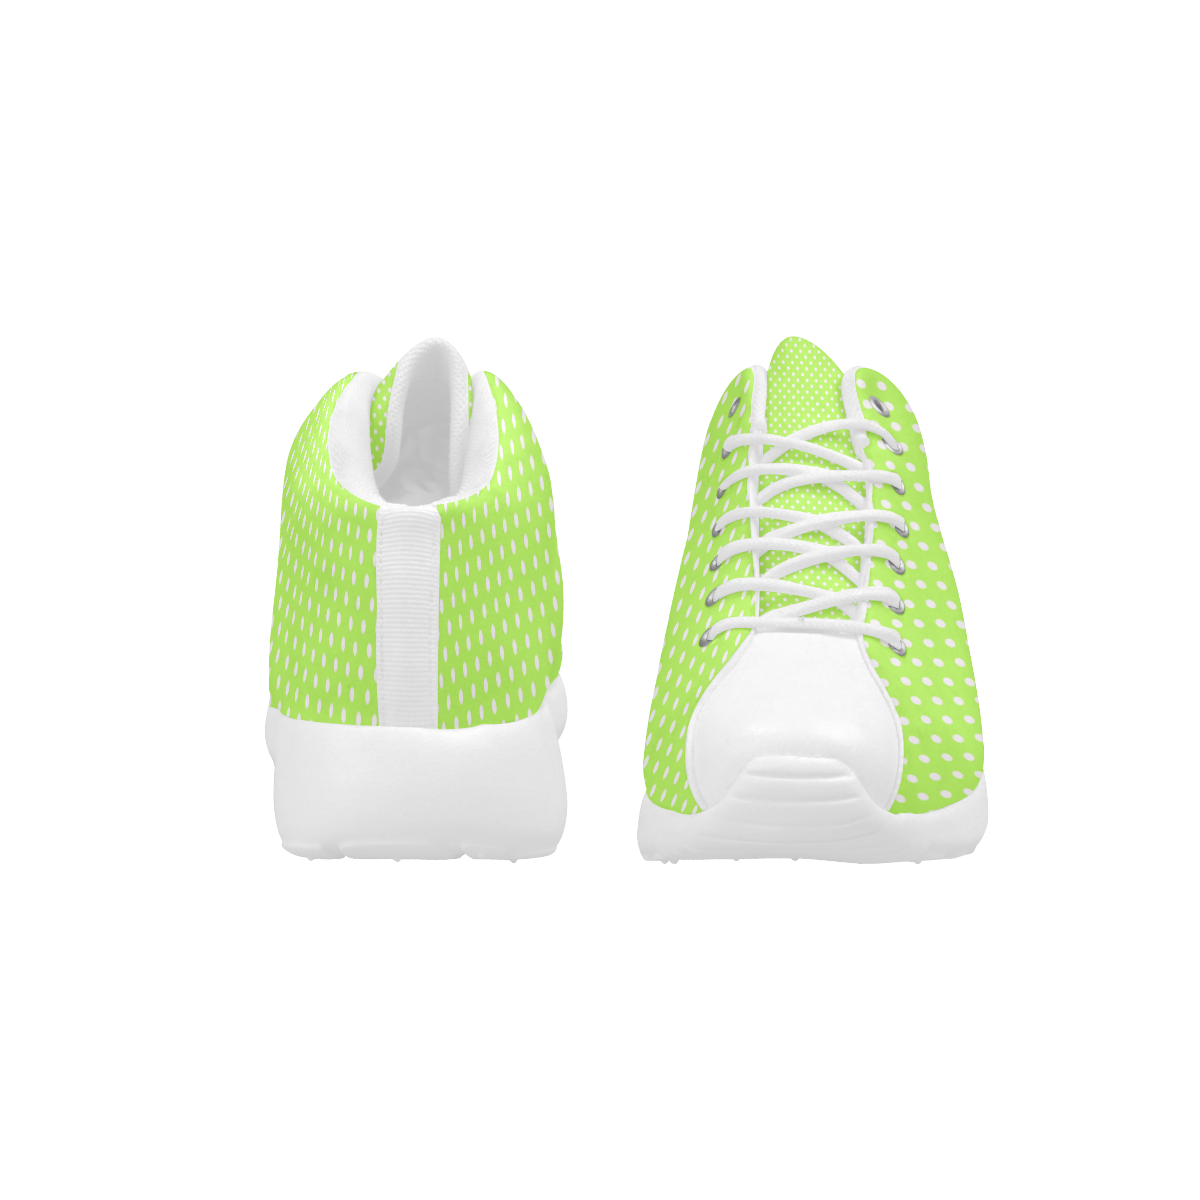 Mint green polka dots Women's Basketball Training Shoes (Model 47502)